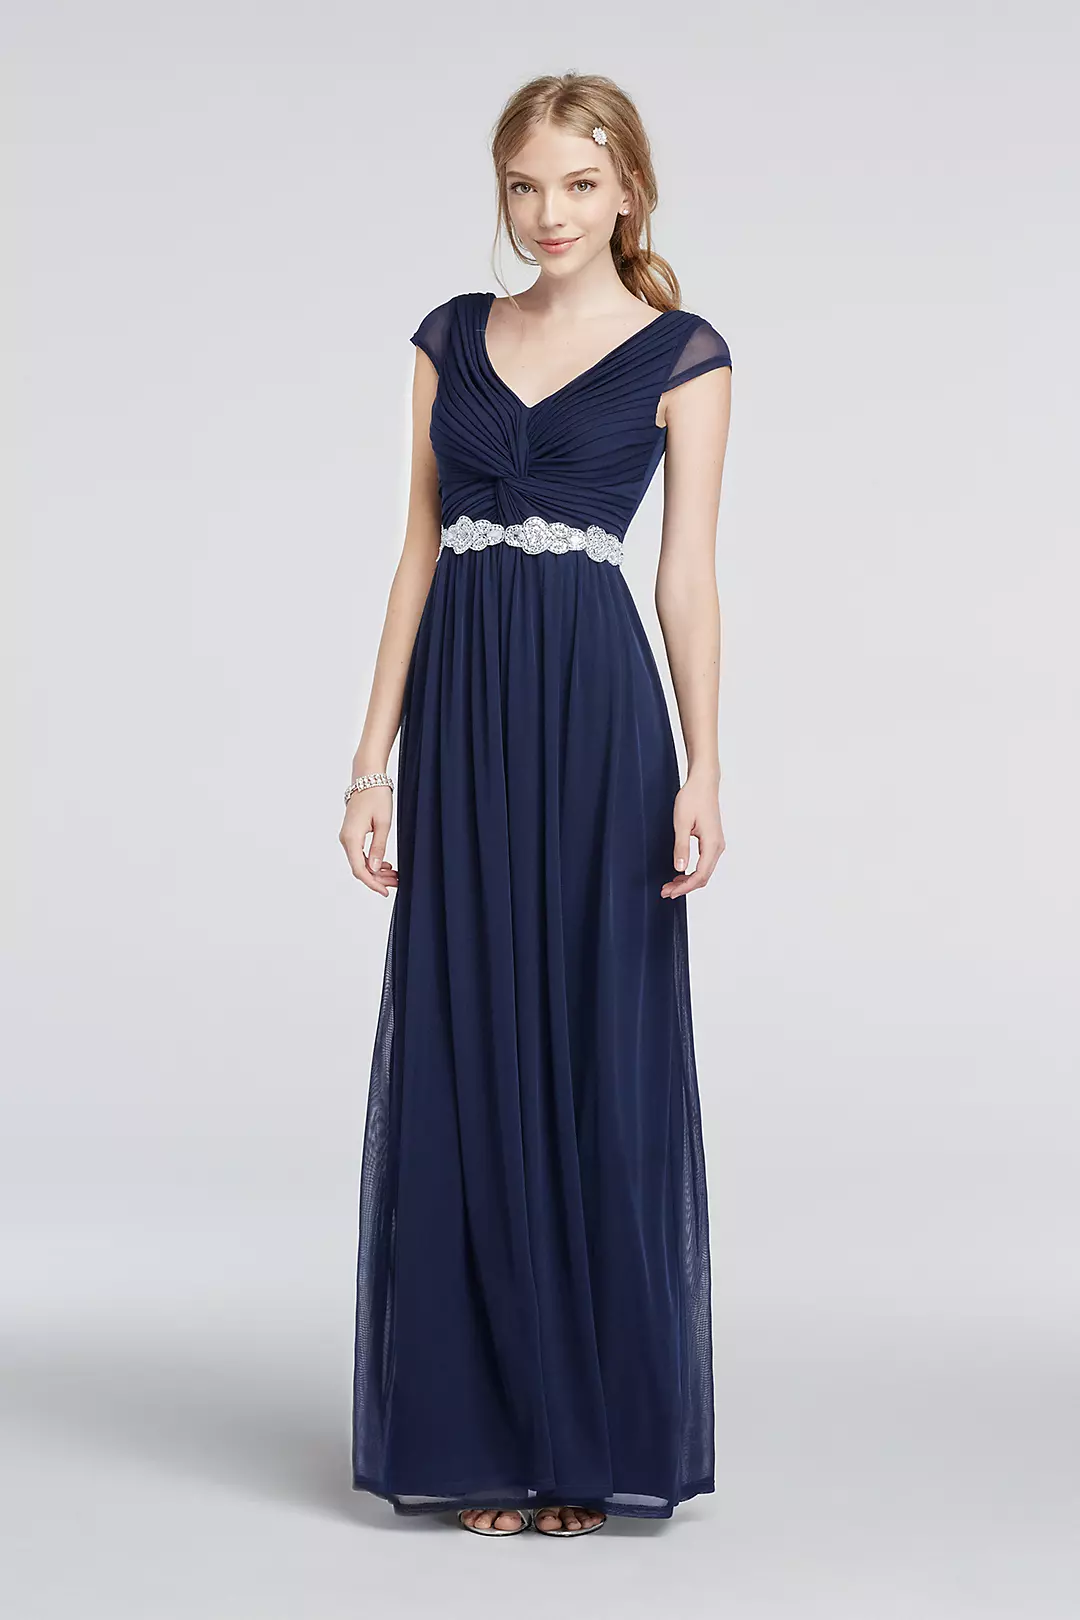 Cap Sleeve Dress with Beaded Waist Image